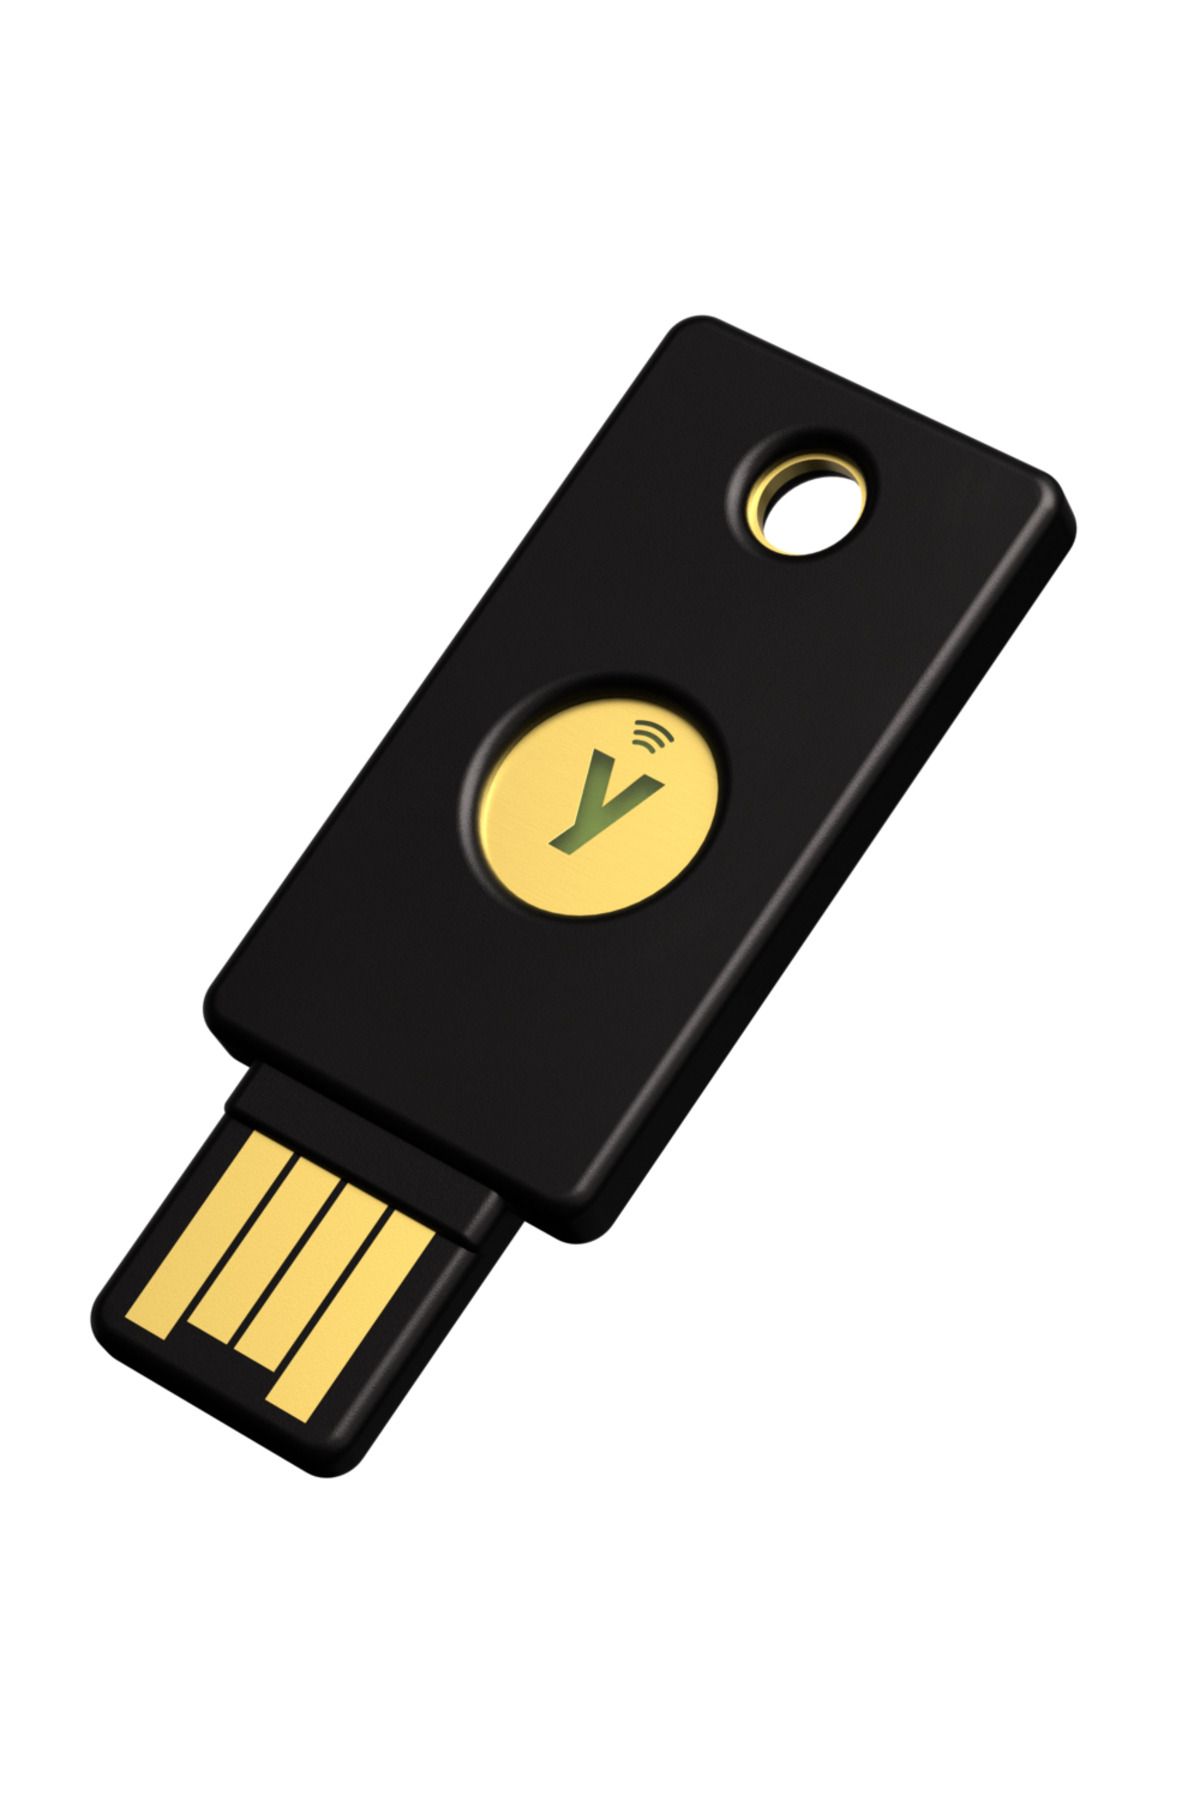 Yubico Yubikey - Security Key NFC